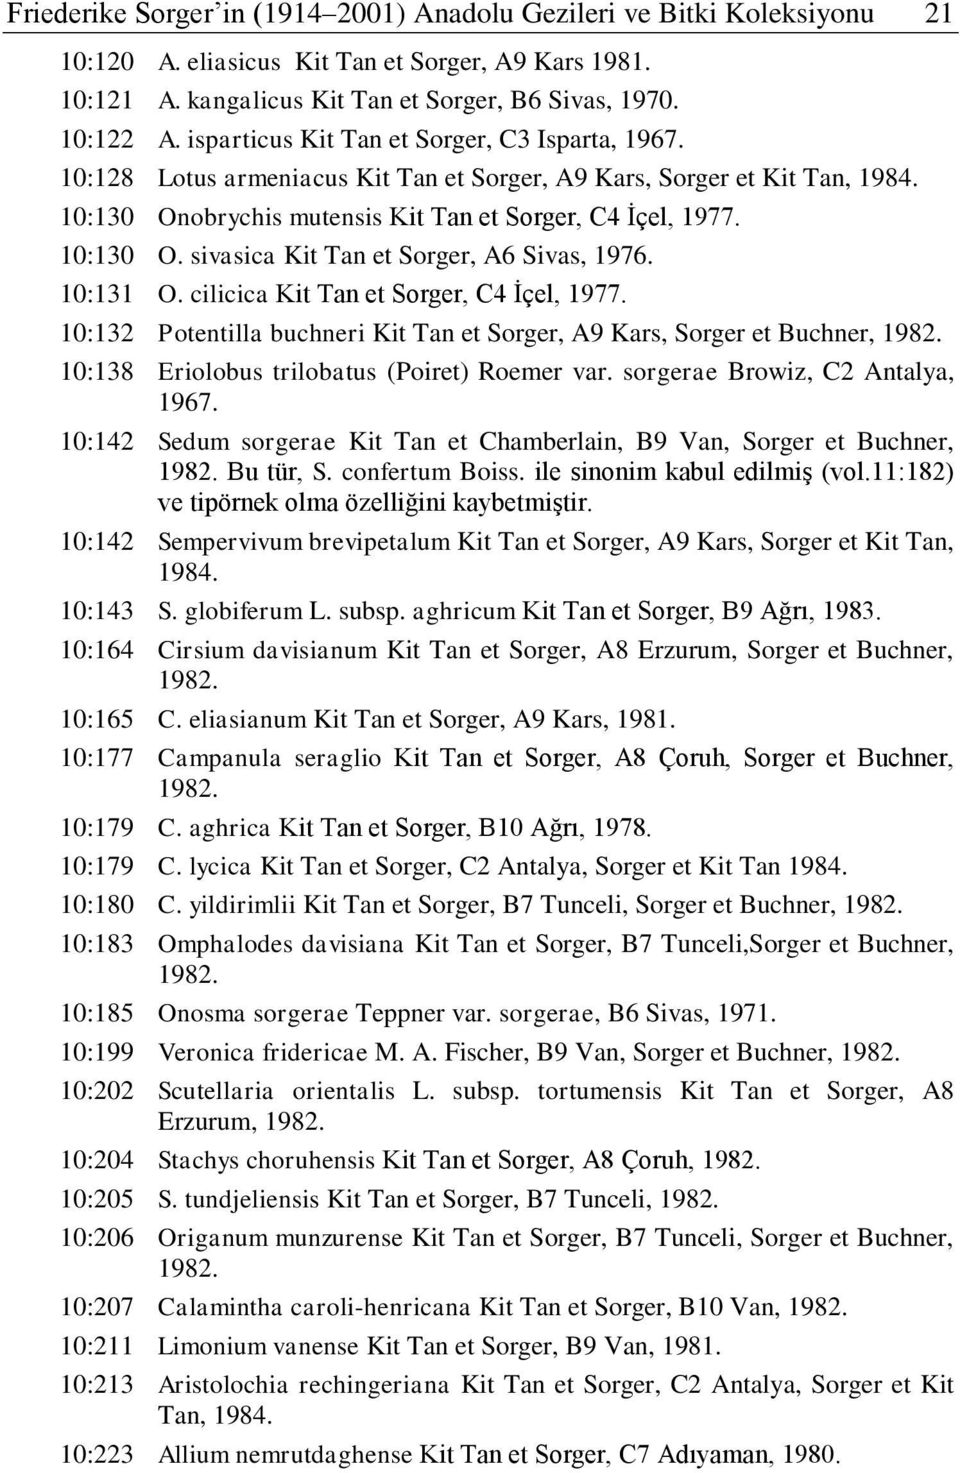 10:131 O. cilicica Kit Tan et Sorger, C4 İçel, 1977. 10:132 Potentilla buchneri Kit Tan et Sorger, A9 Kars, Sorger et Buchner, 1982. 10:138 Eriolobus trilobatus (Poiret) Roemer var.